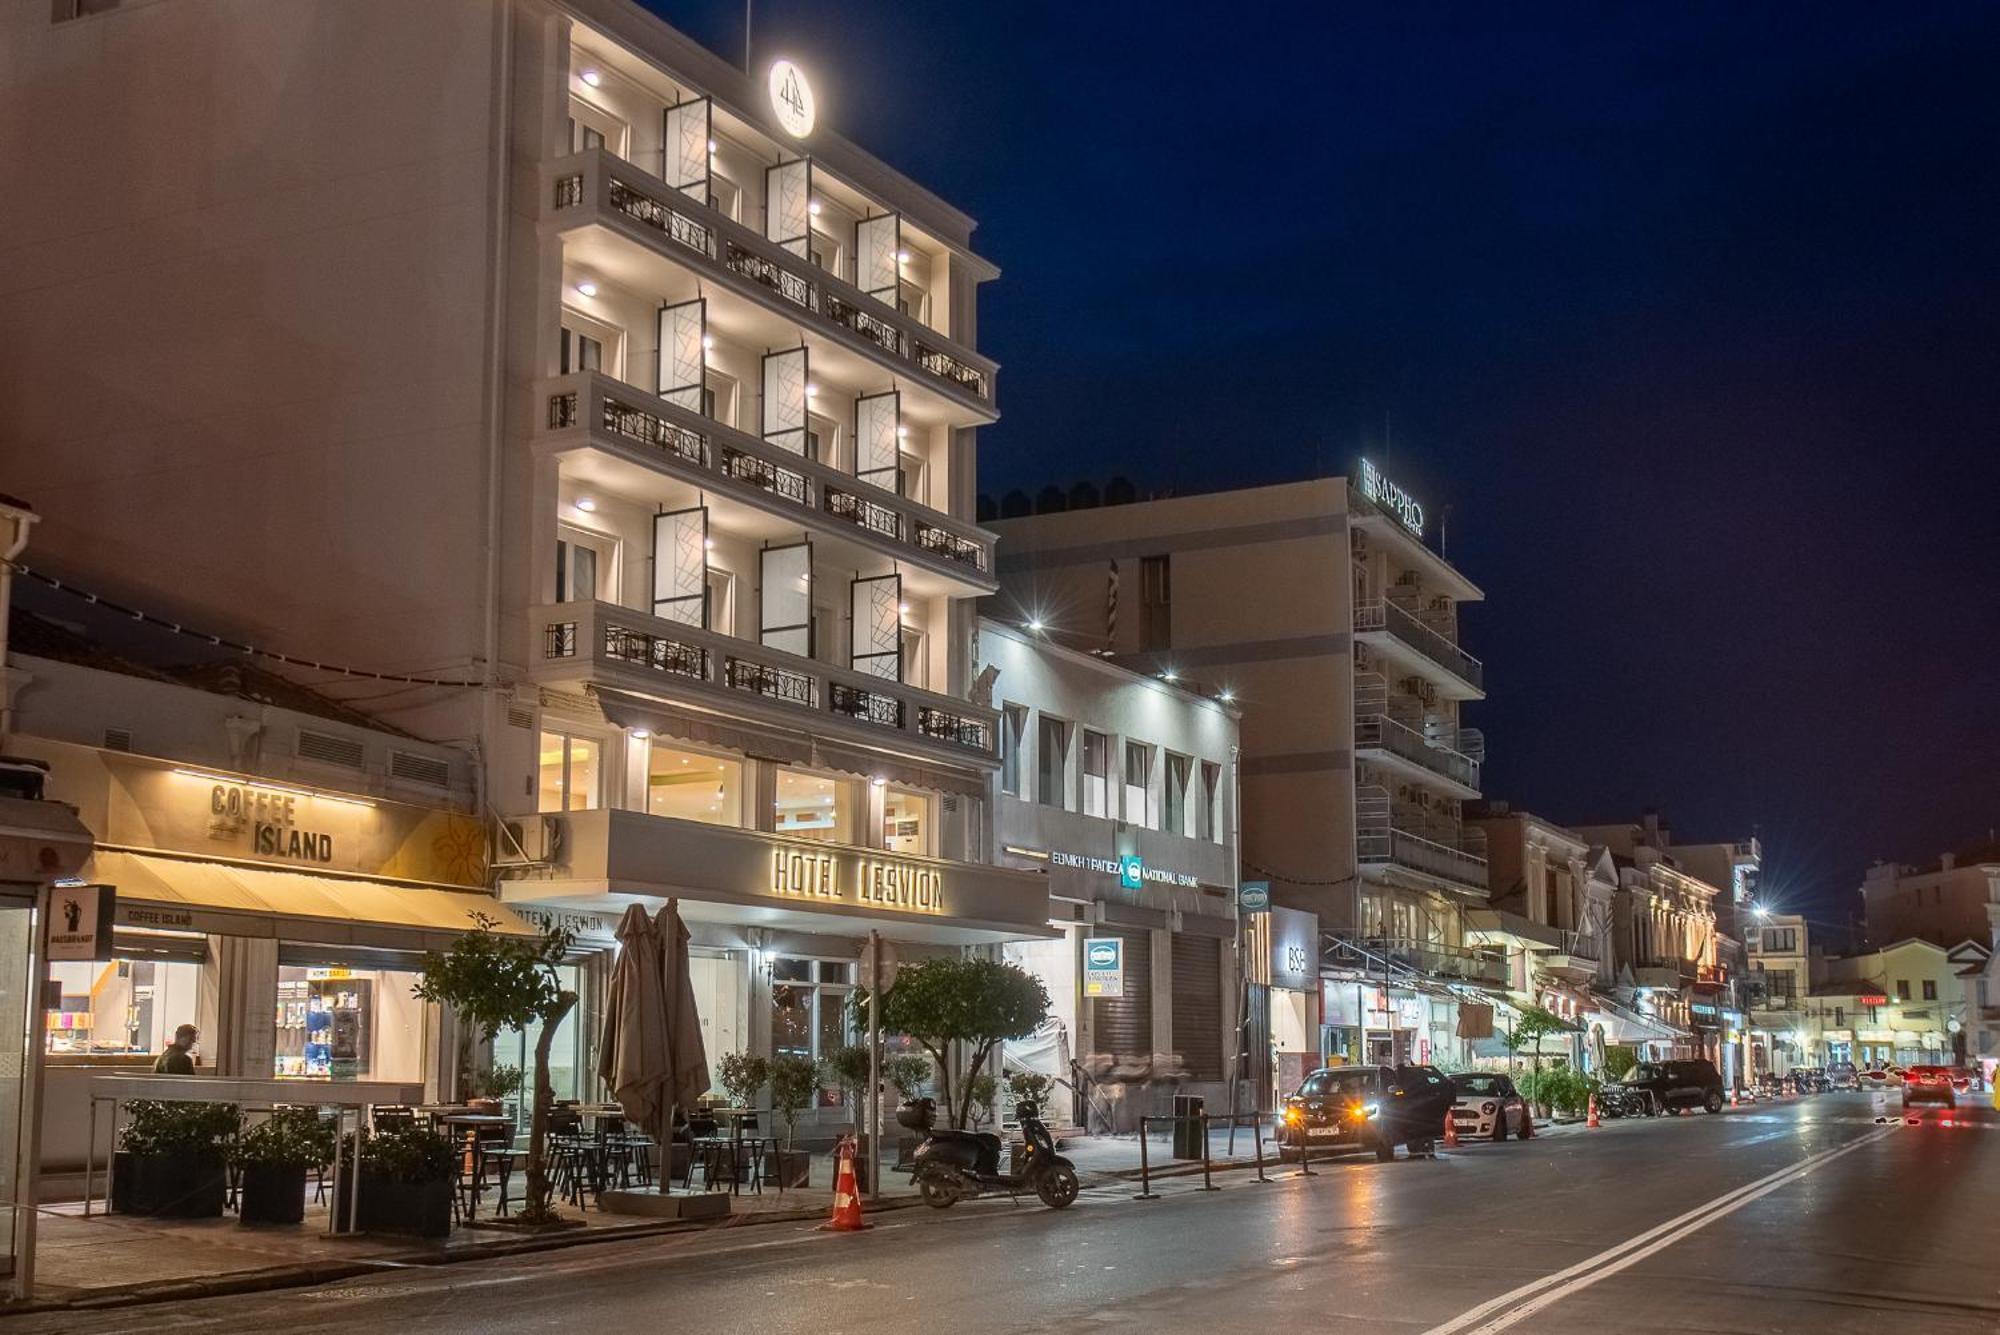 Lesvion Hotel Mytilene ภายนอก รูปภาพ